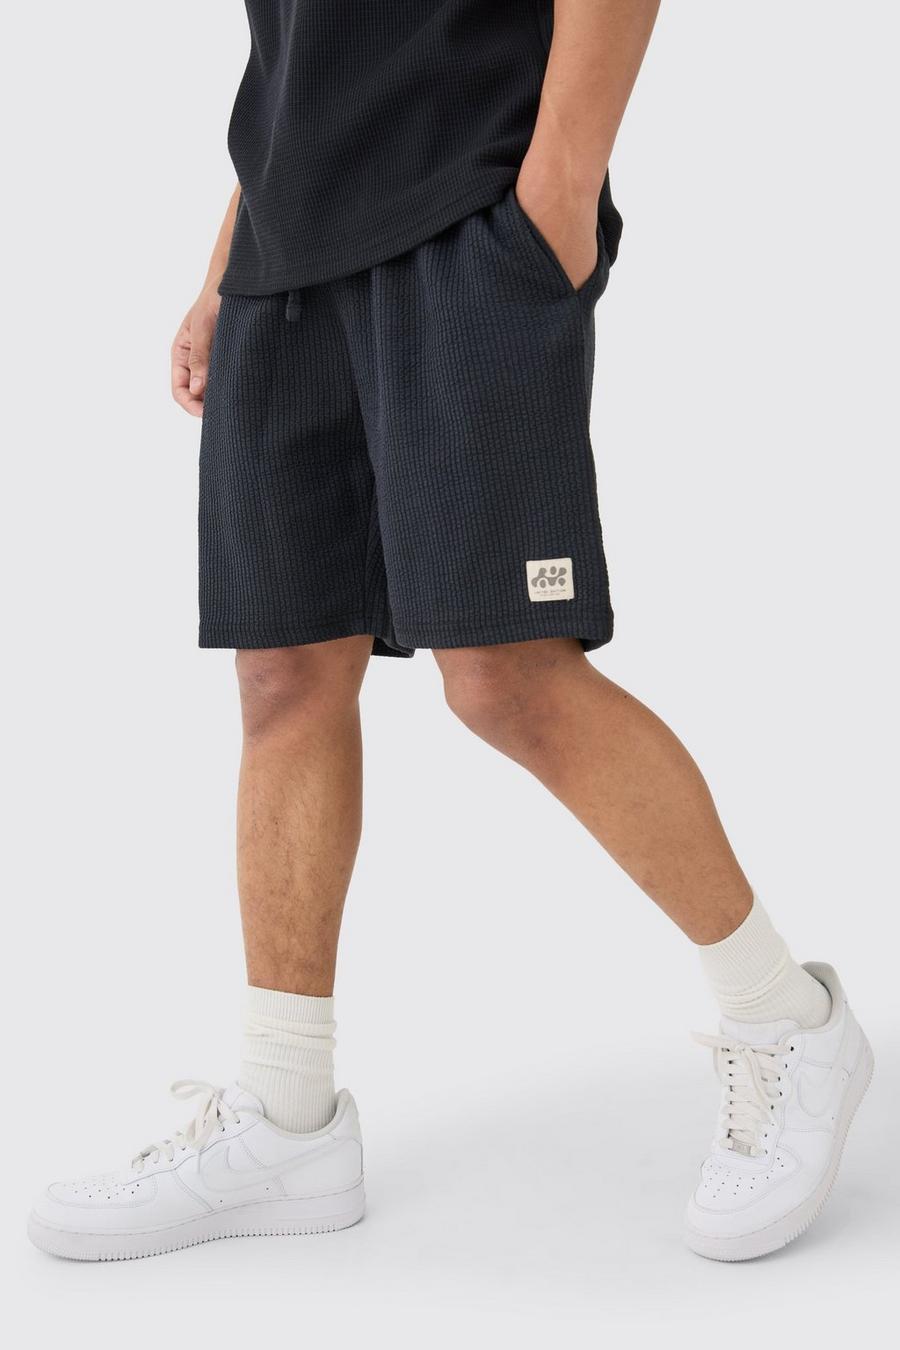 Pantalón corto holgado texturizado de largo medio con etiqueta de tela, Black